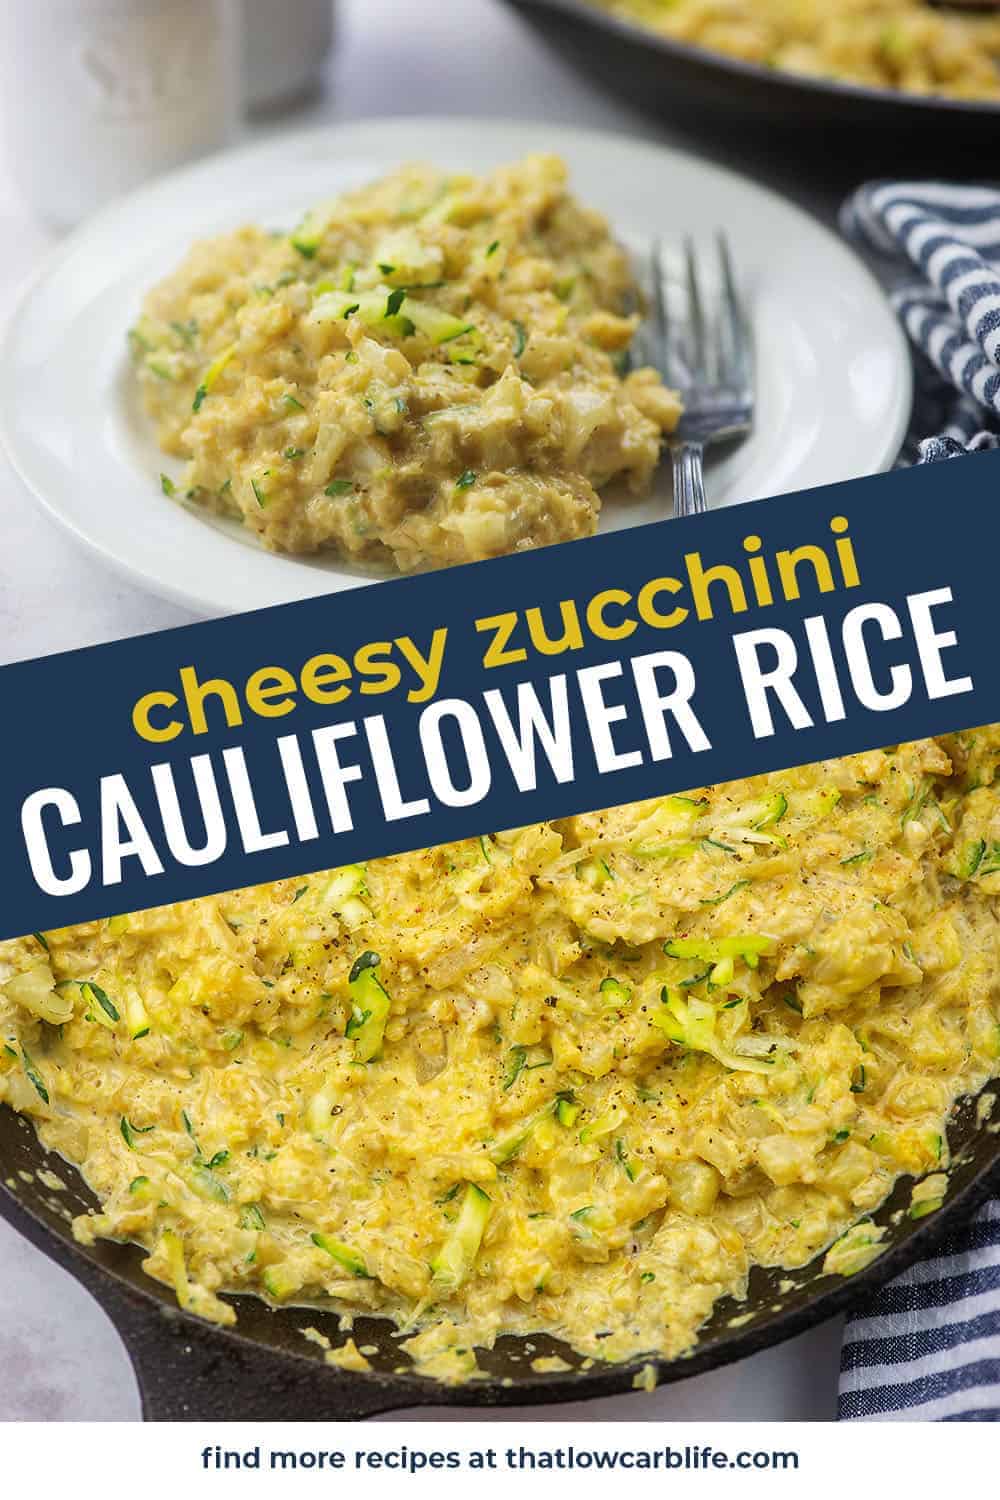 cheesy cauliflower rice recipe photo collage for pinterest